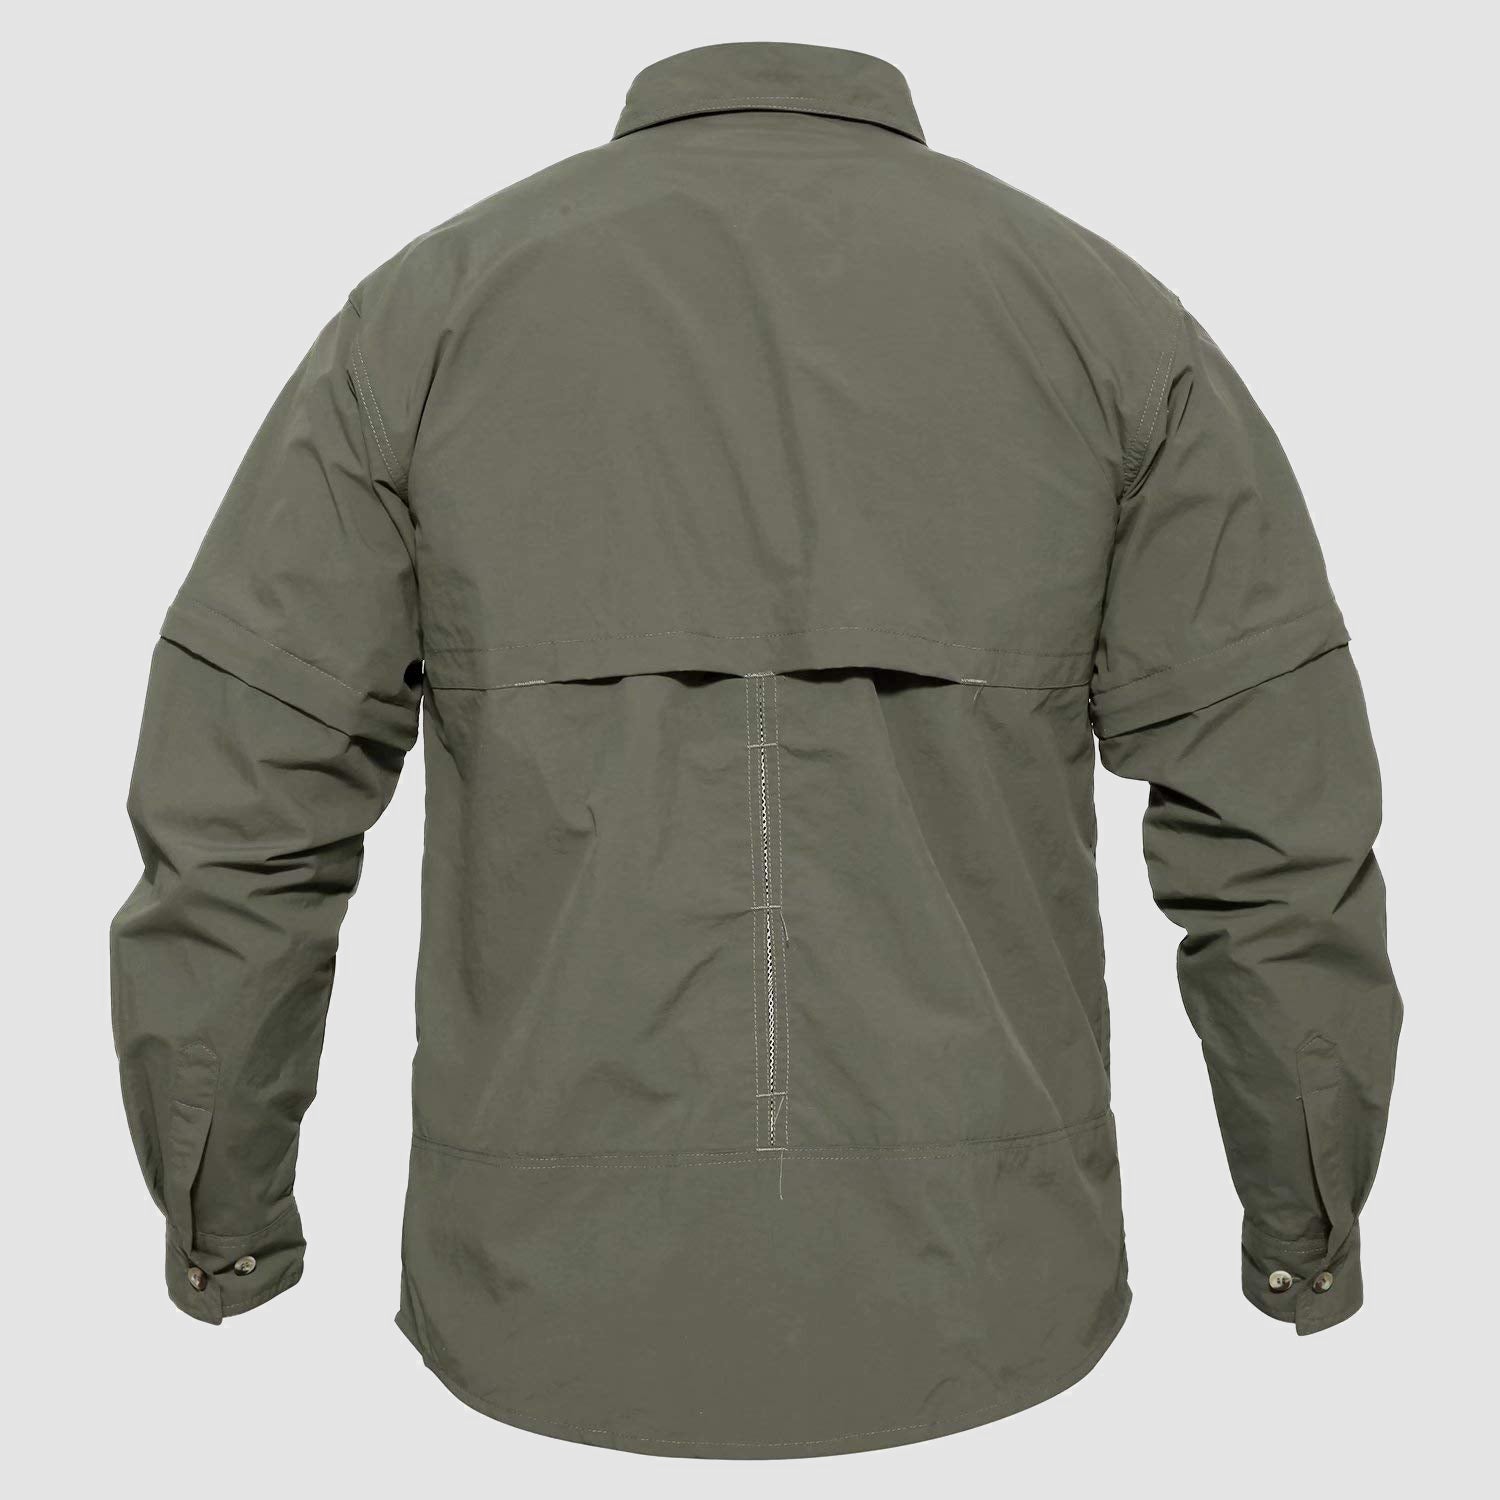 Mens Fishing Hiking Shirts with Detachable Sleeves Long/Short Sleeve Quick Dry, Black / XL